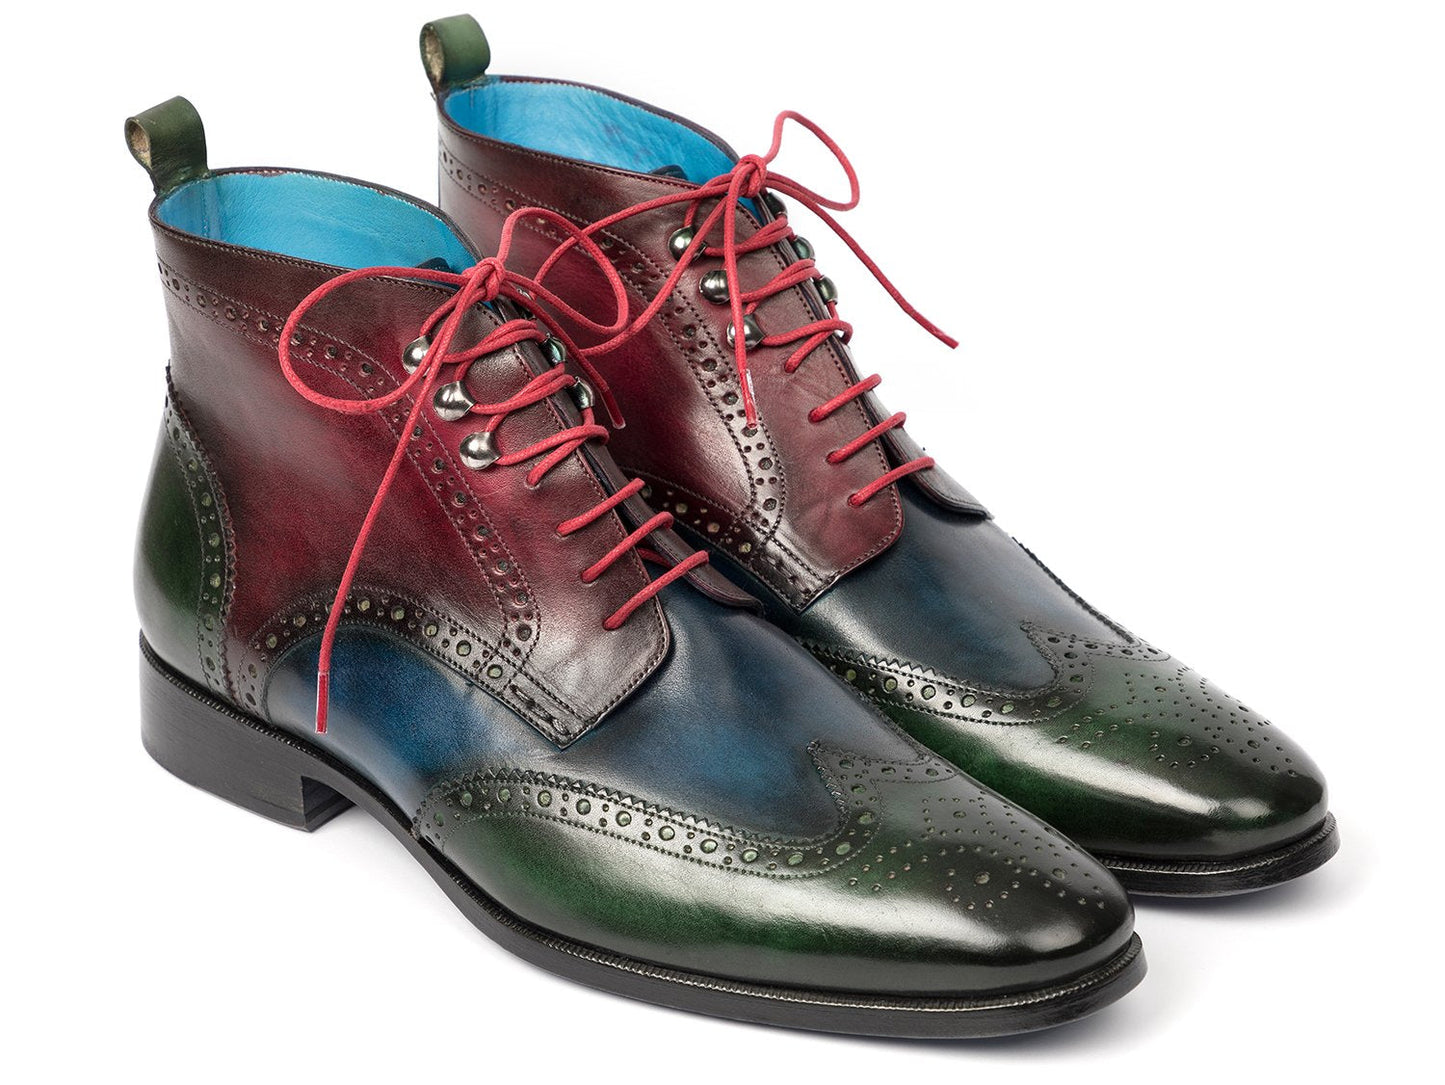 Paul Parkman Wingtip Ankle Boots Three Tone Green Blue Bordeaux (ID#777-GRN-BLU)